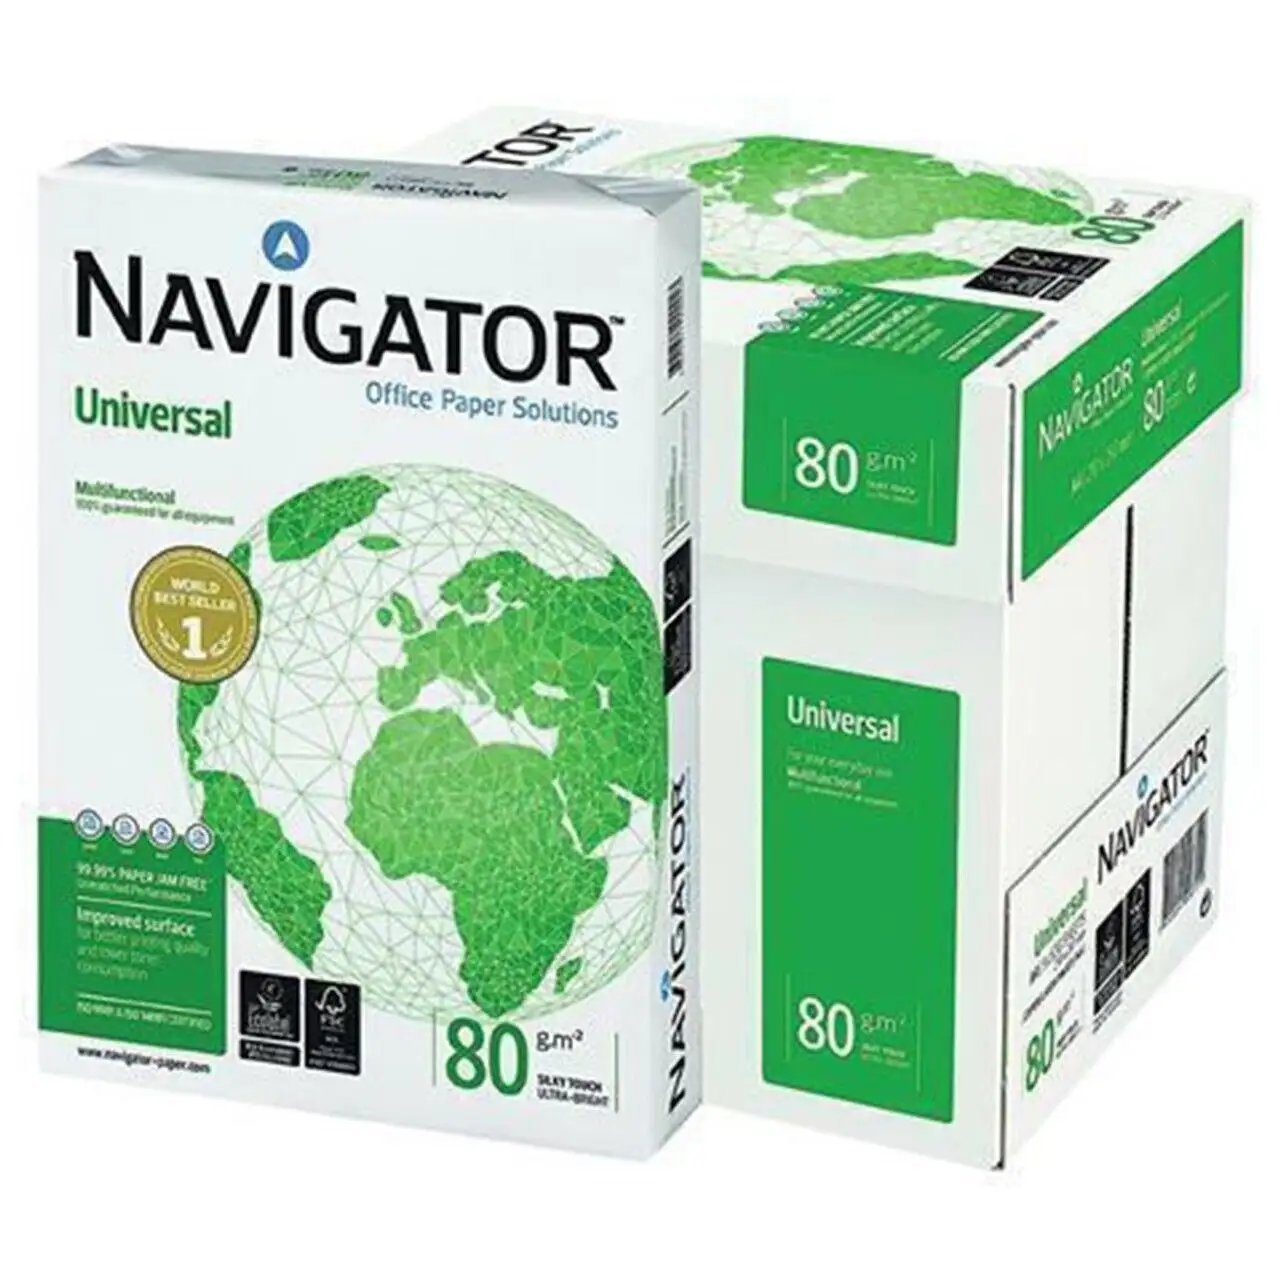 Navigator Universal A4 Copy Paper For Sale